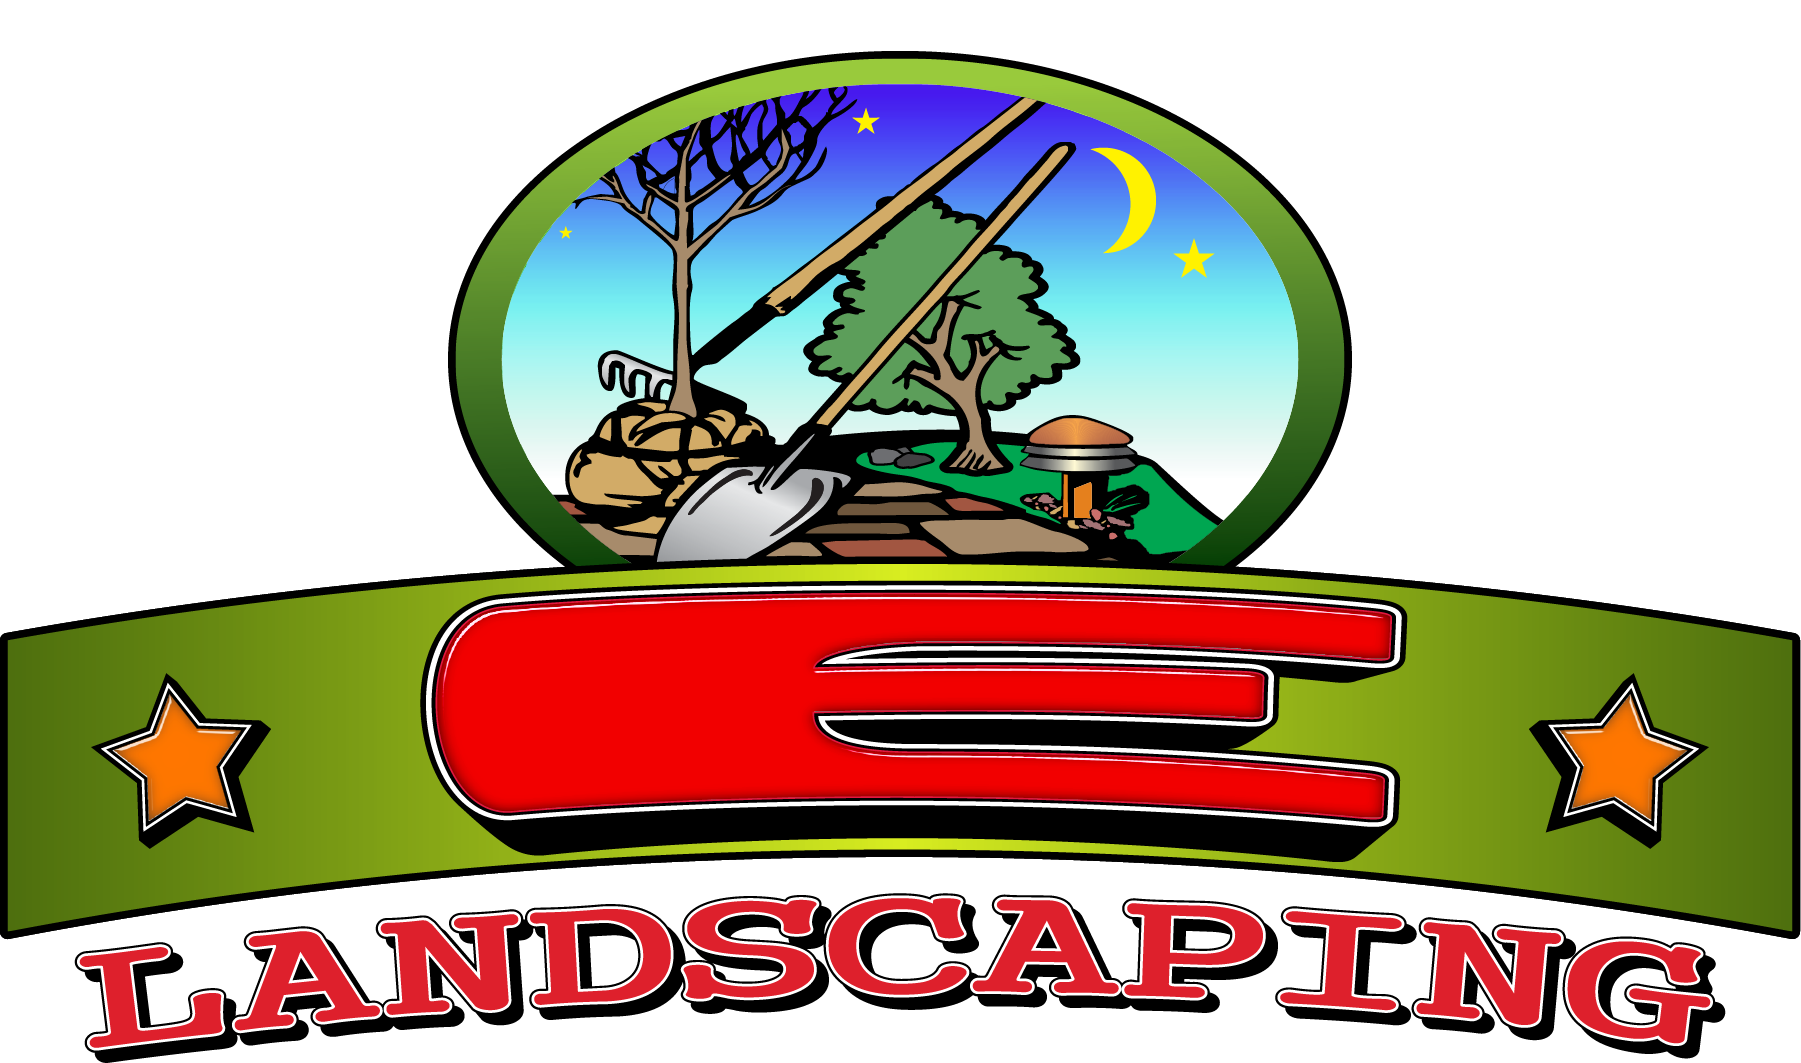 E Landscaping - Treasure Valley Landscaping, Patio & Sprinkler Installation